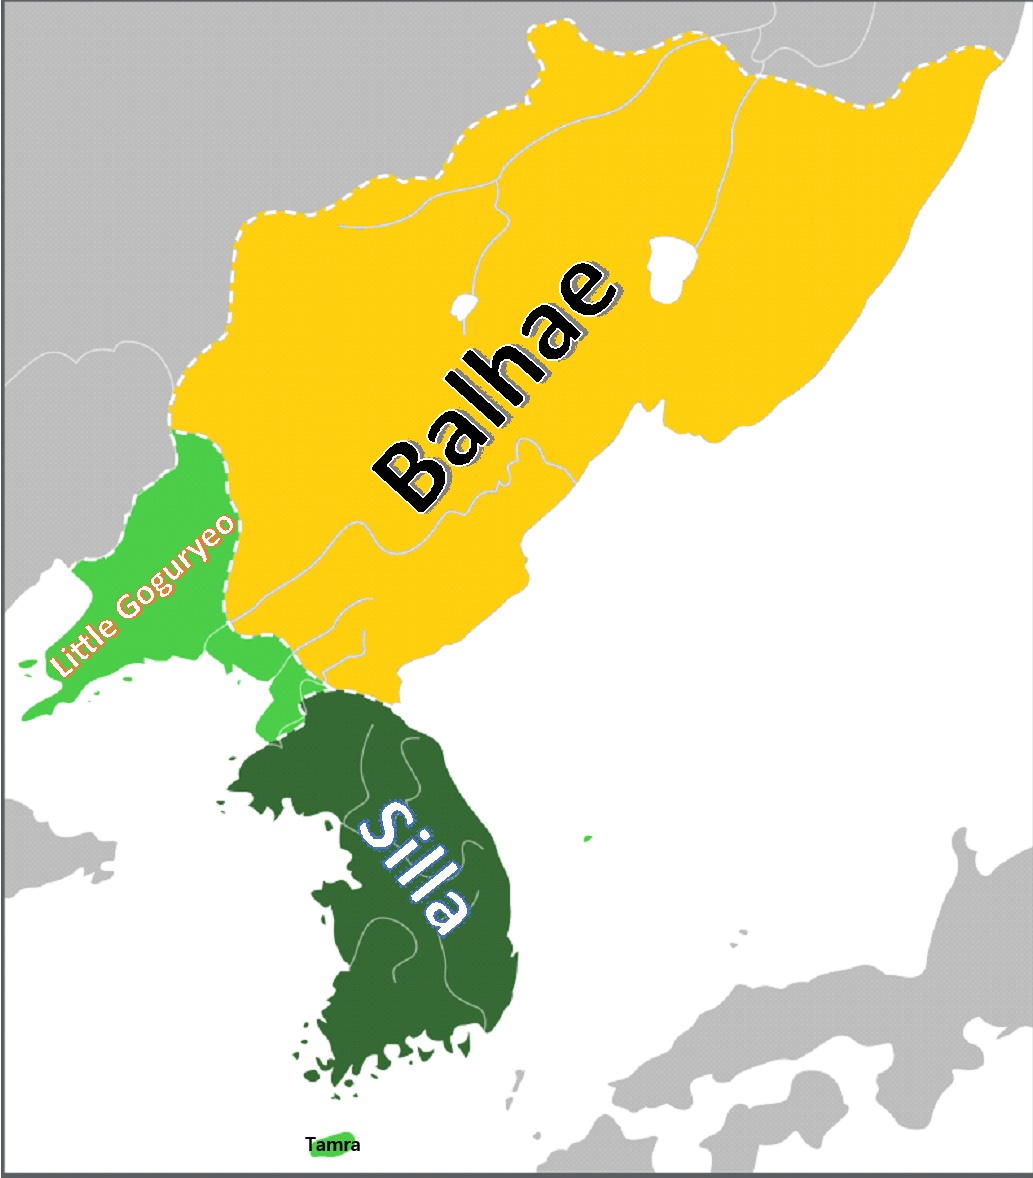 Korea w latach 750-850 roku